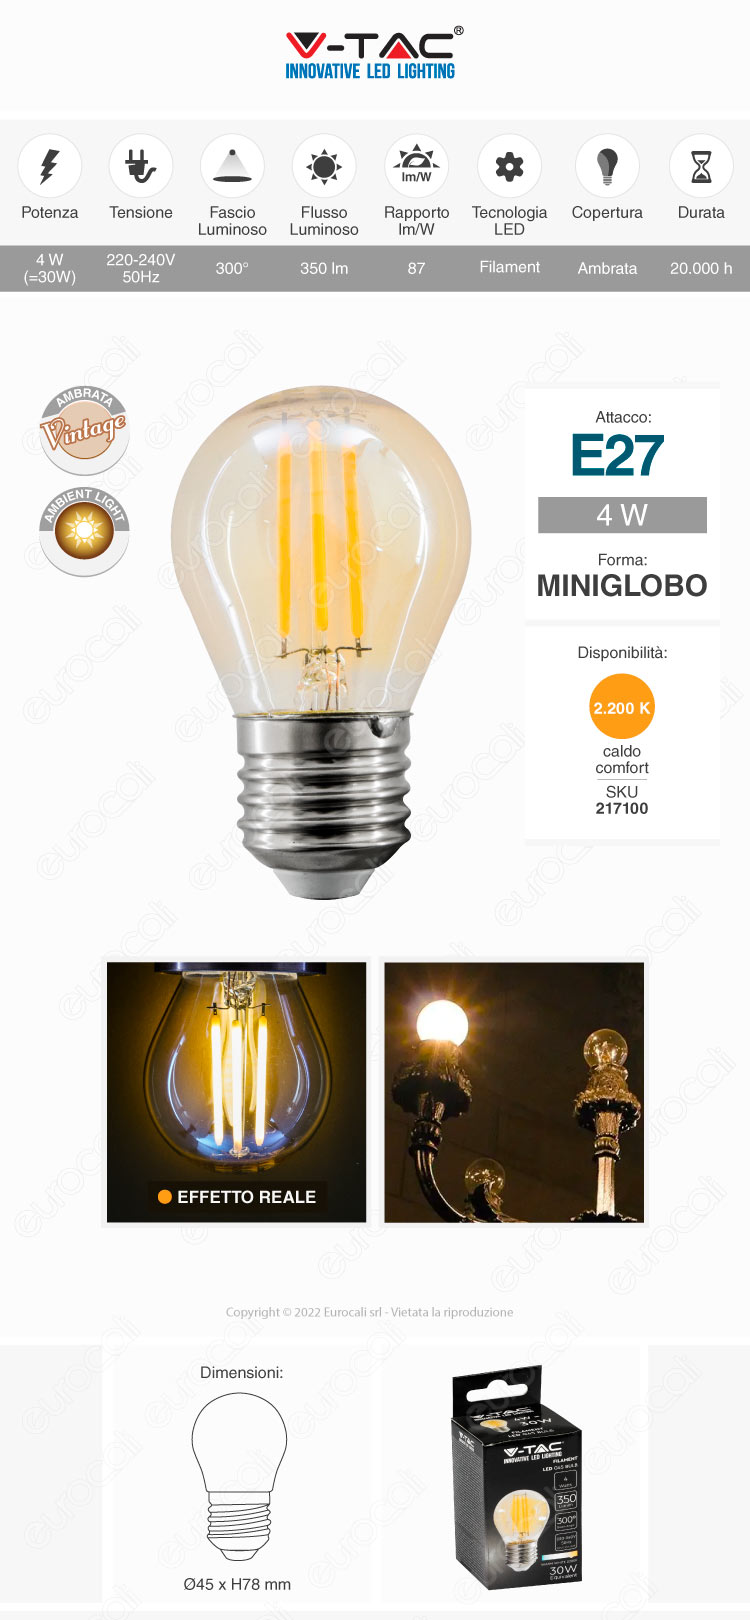 v-tac vt-1957 lampadina led e27 4w miniglobo g45 filament amber glass